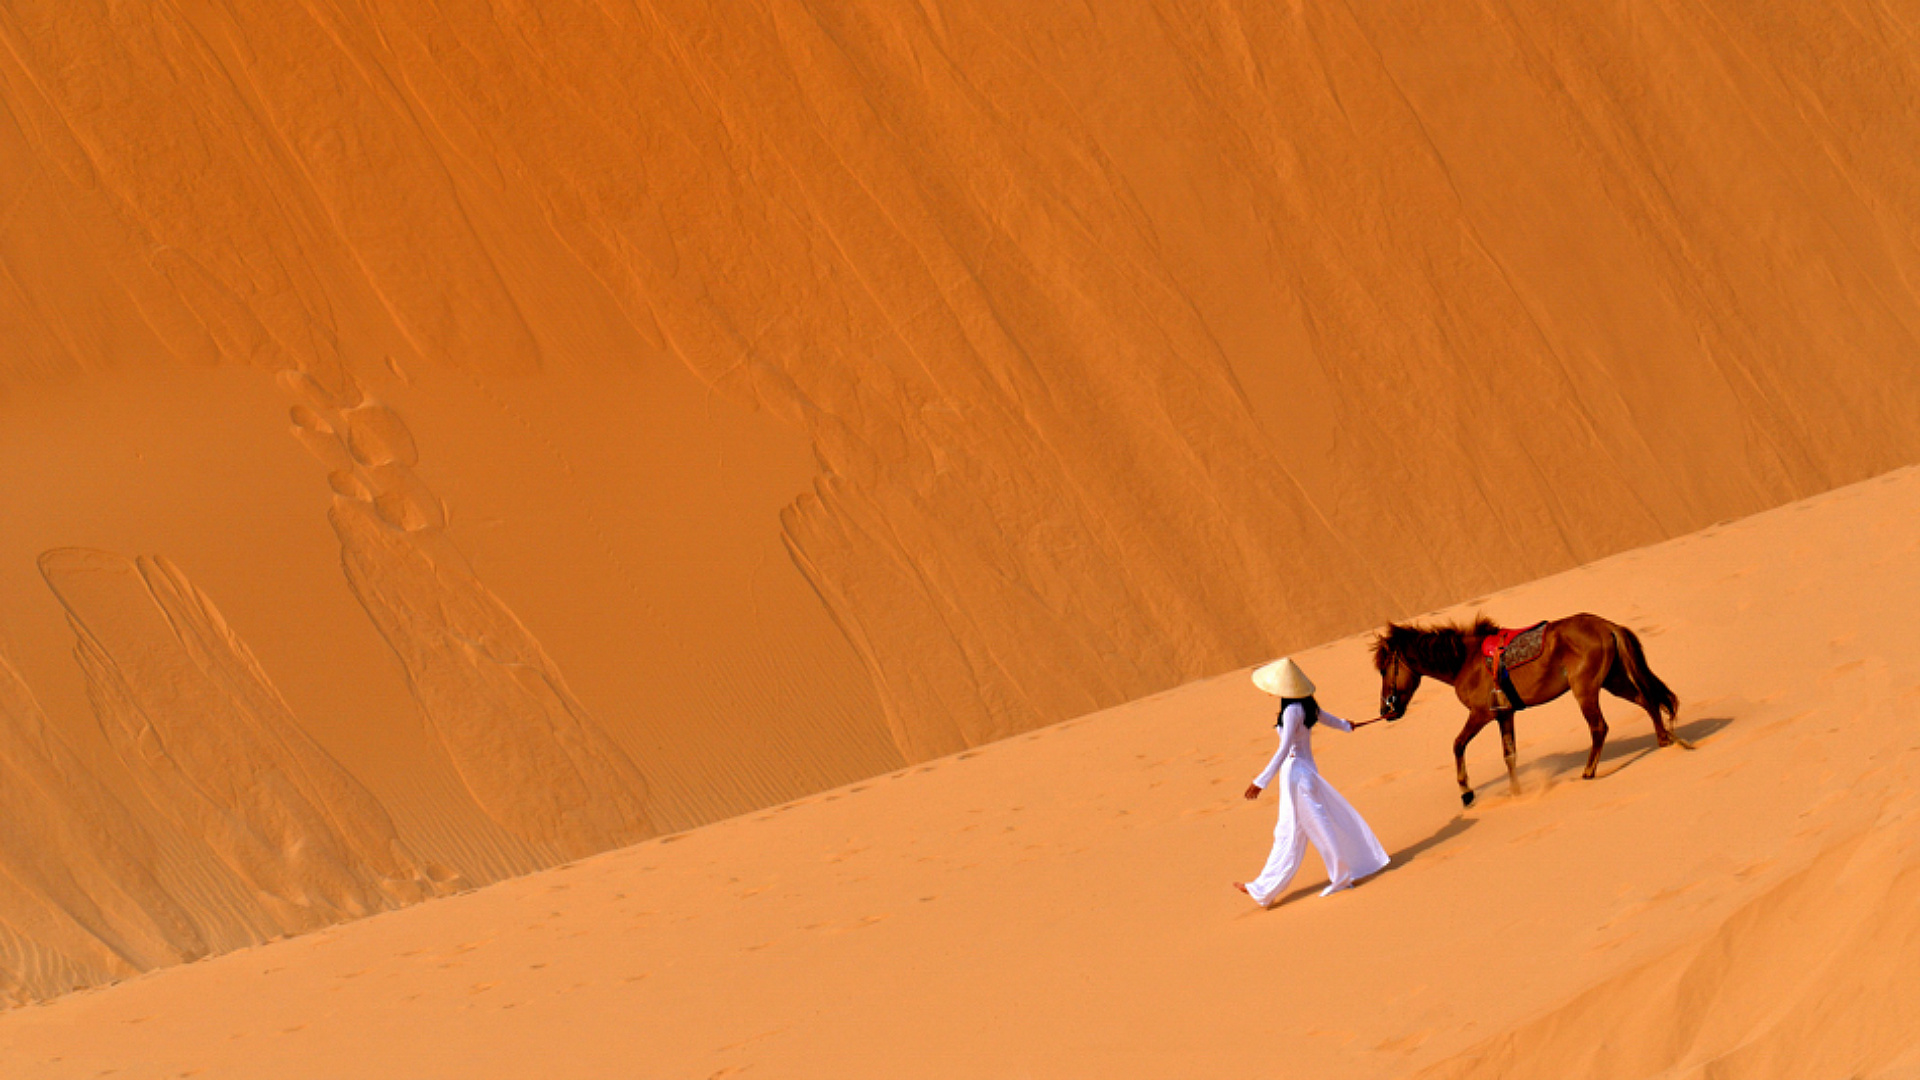 Караван движется. Девушка на лошади в пустыне. Лошадь в пустыне. Караван в пустыне. Девушка и Караван в пустыне.